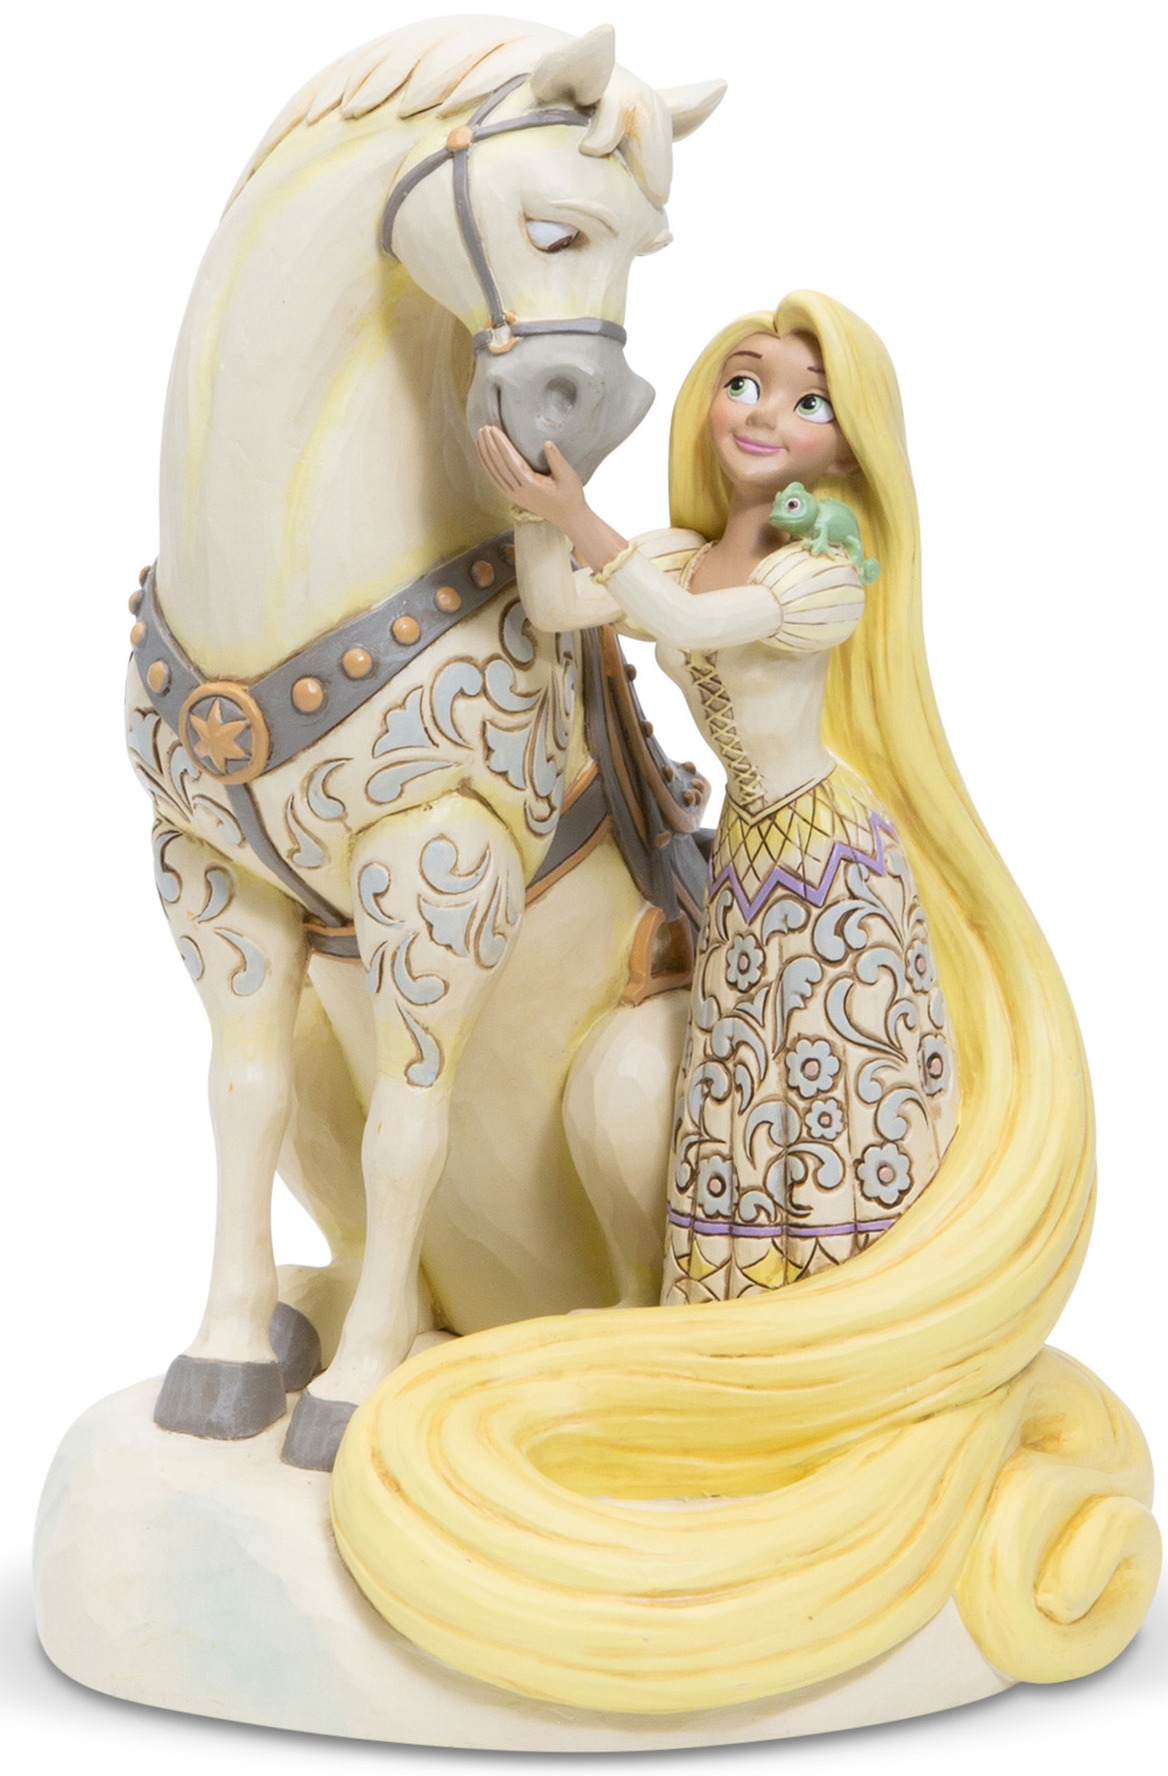 Disney Traditions by Jim Shore 6005958 Rapunzel White Woodland Figurine